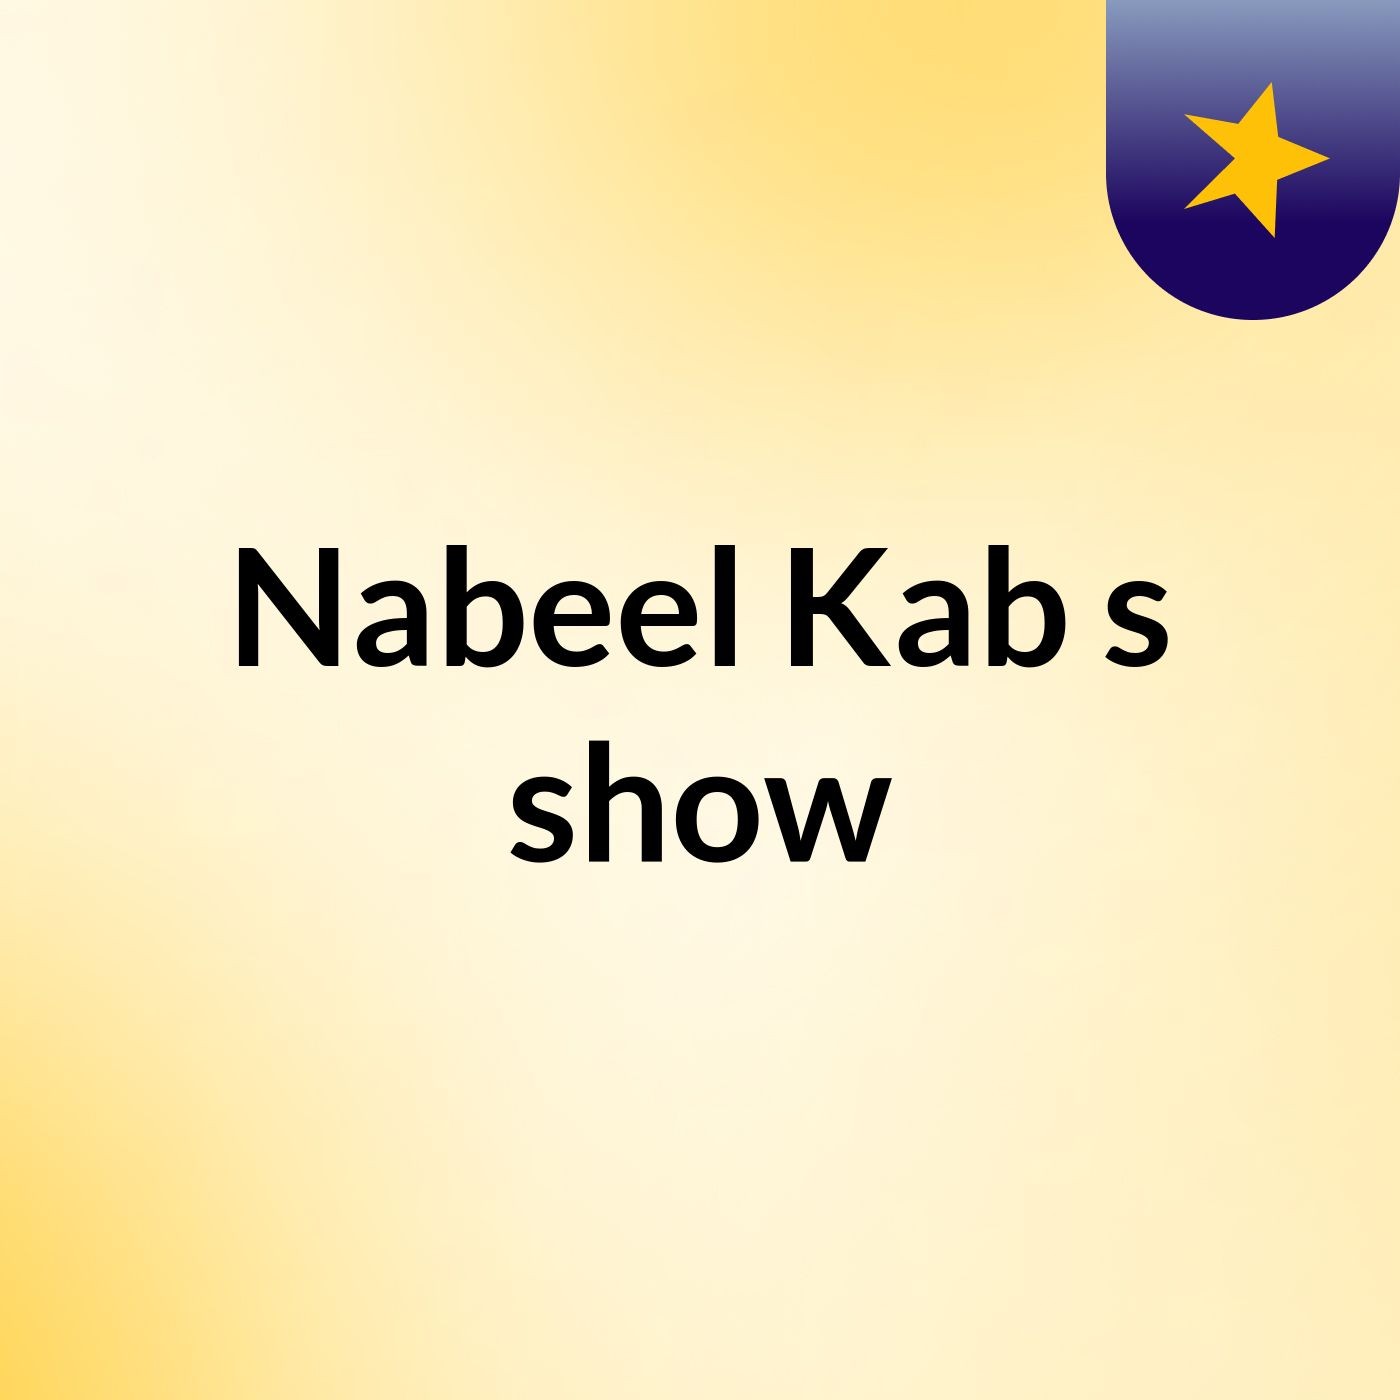 Nabeel Kab's show